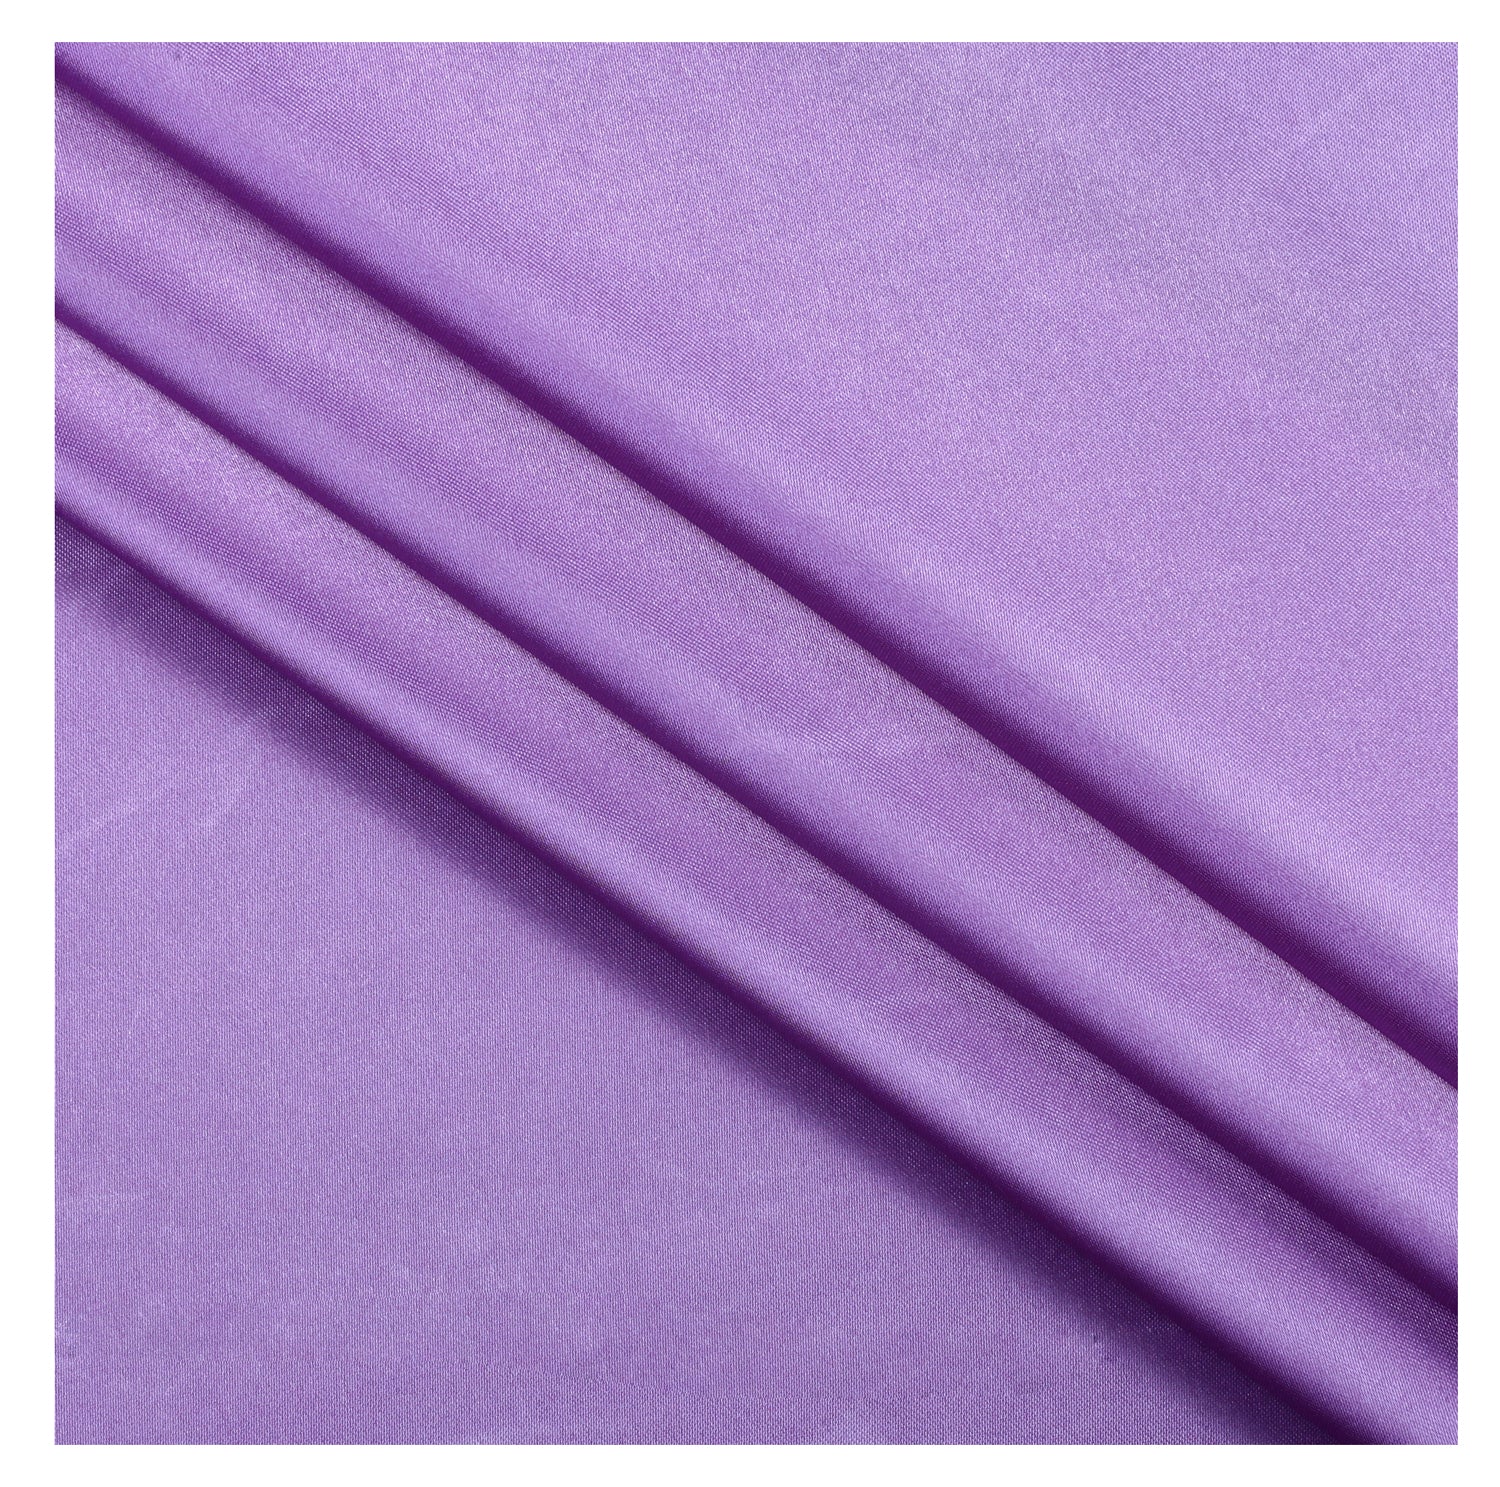 Lavender,files/Lavenderfabric2